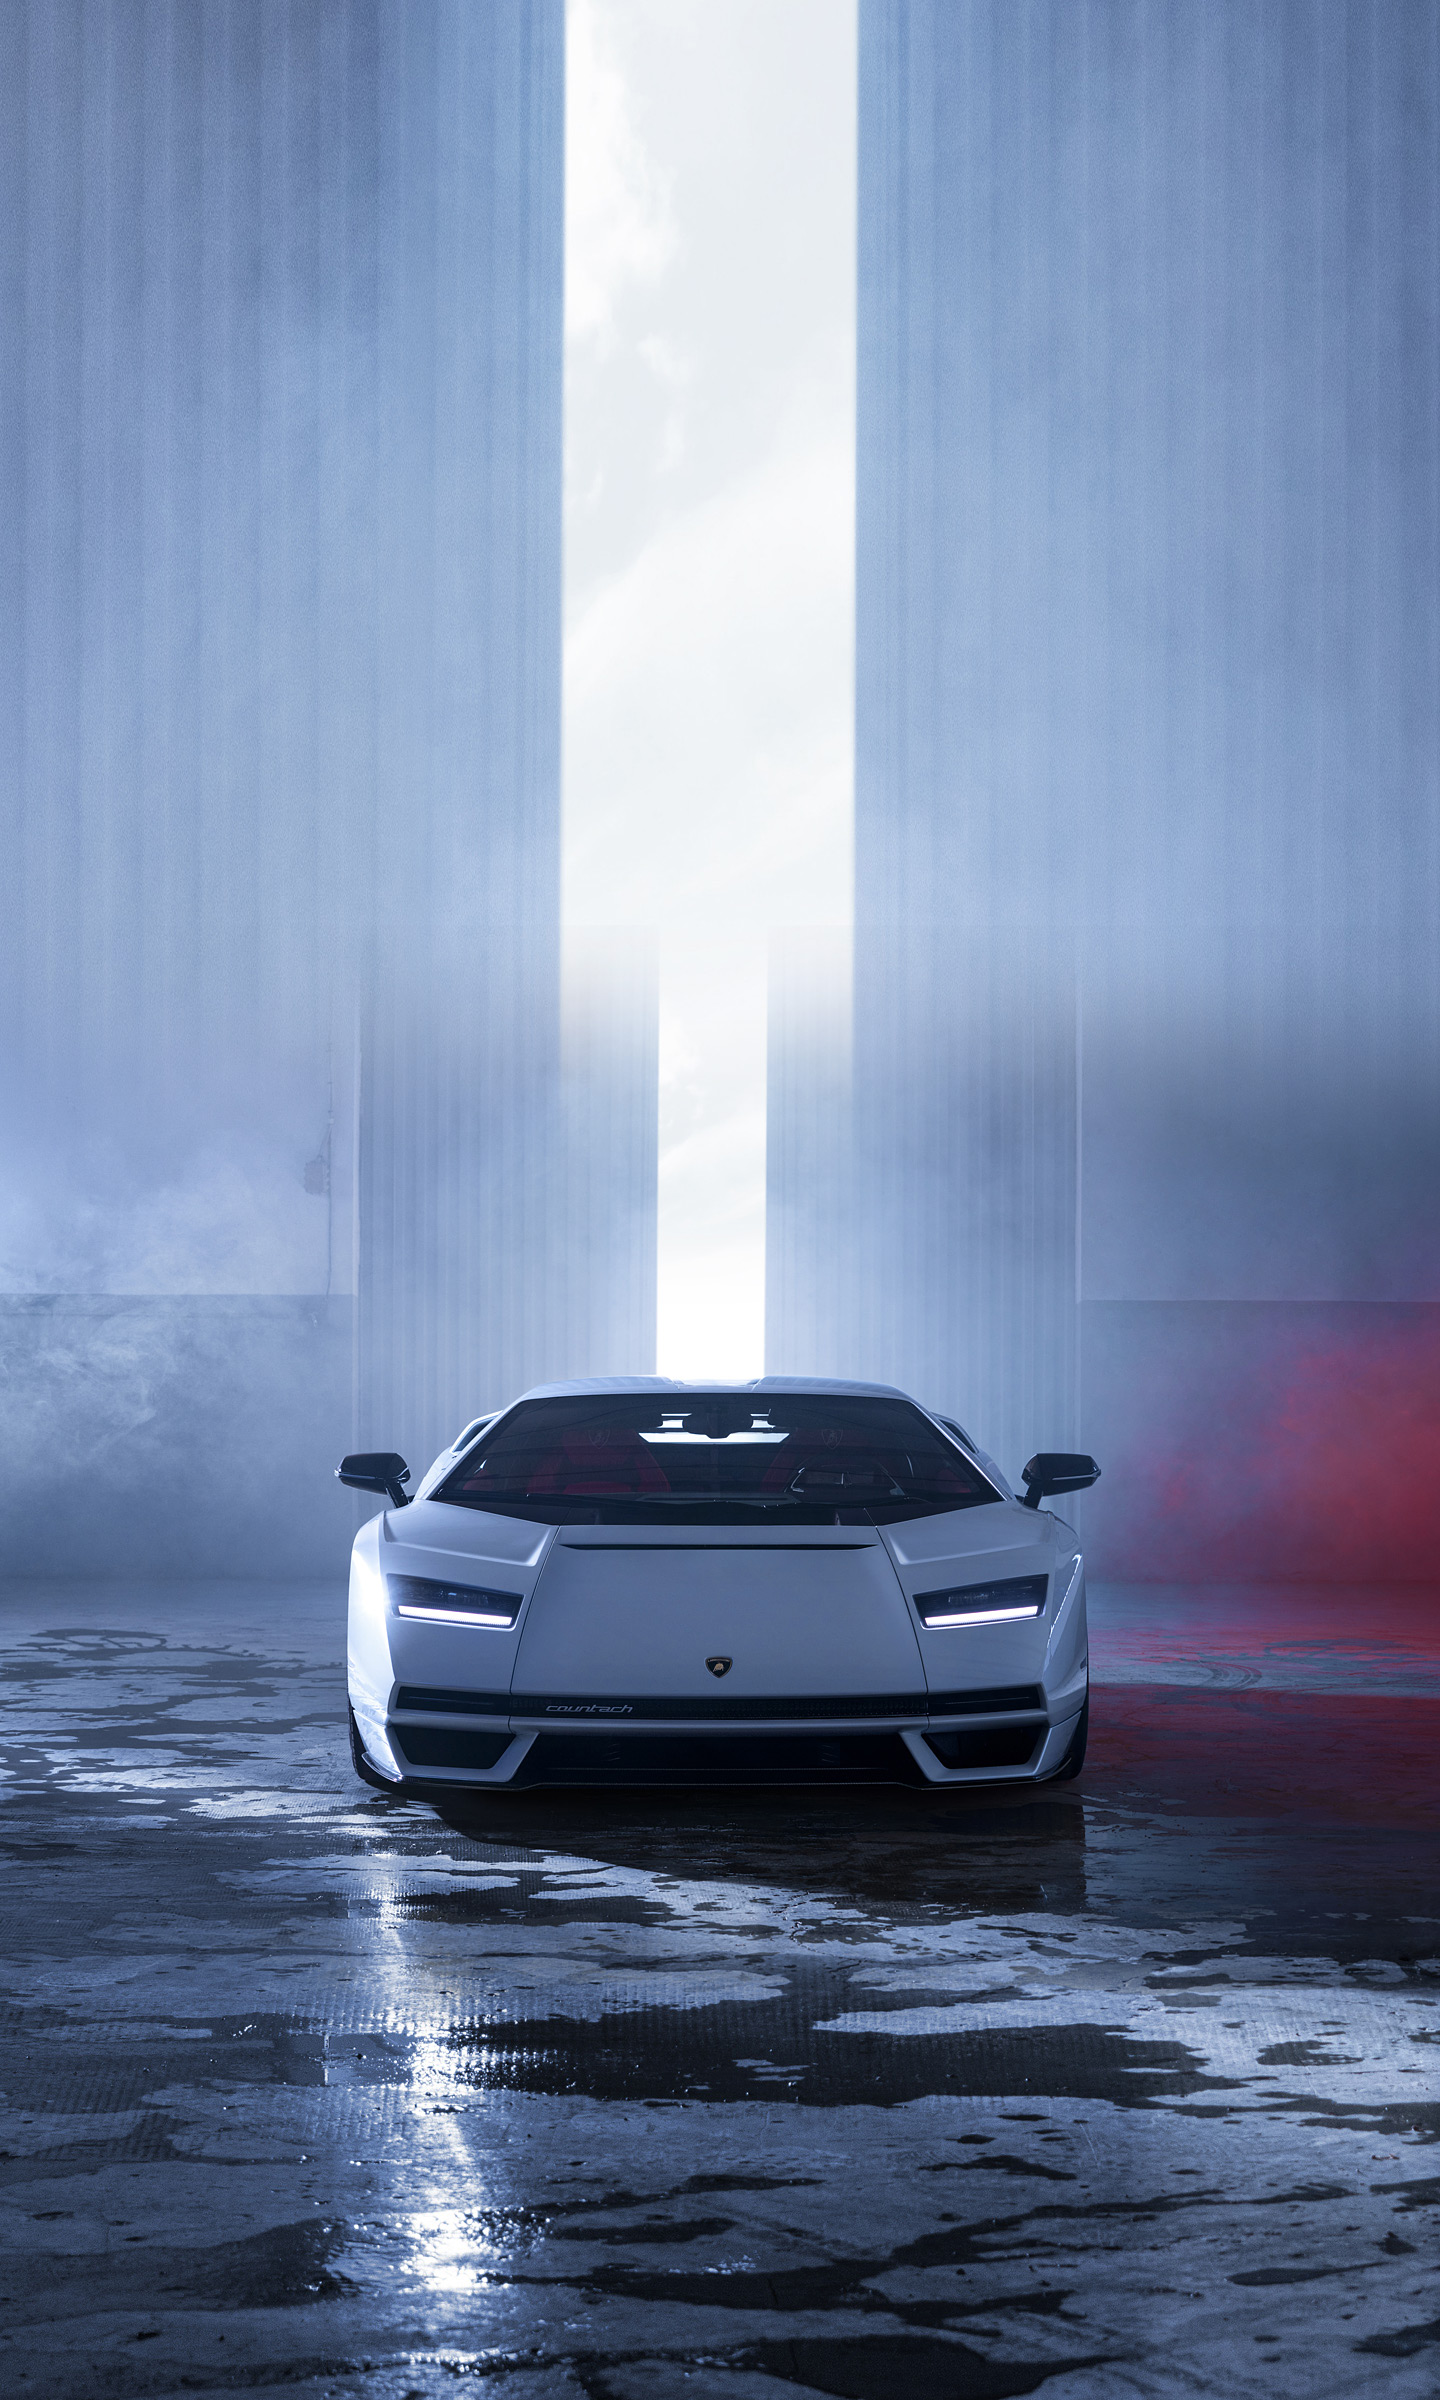  2022 Lamborghini Countach LPI 800-4 Wallpaper.